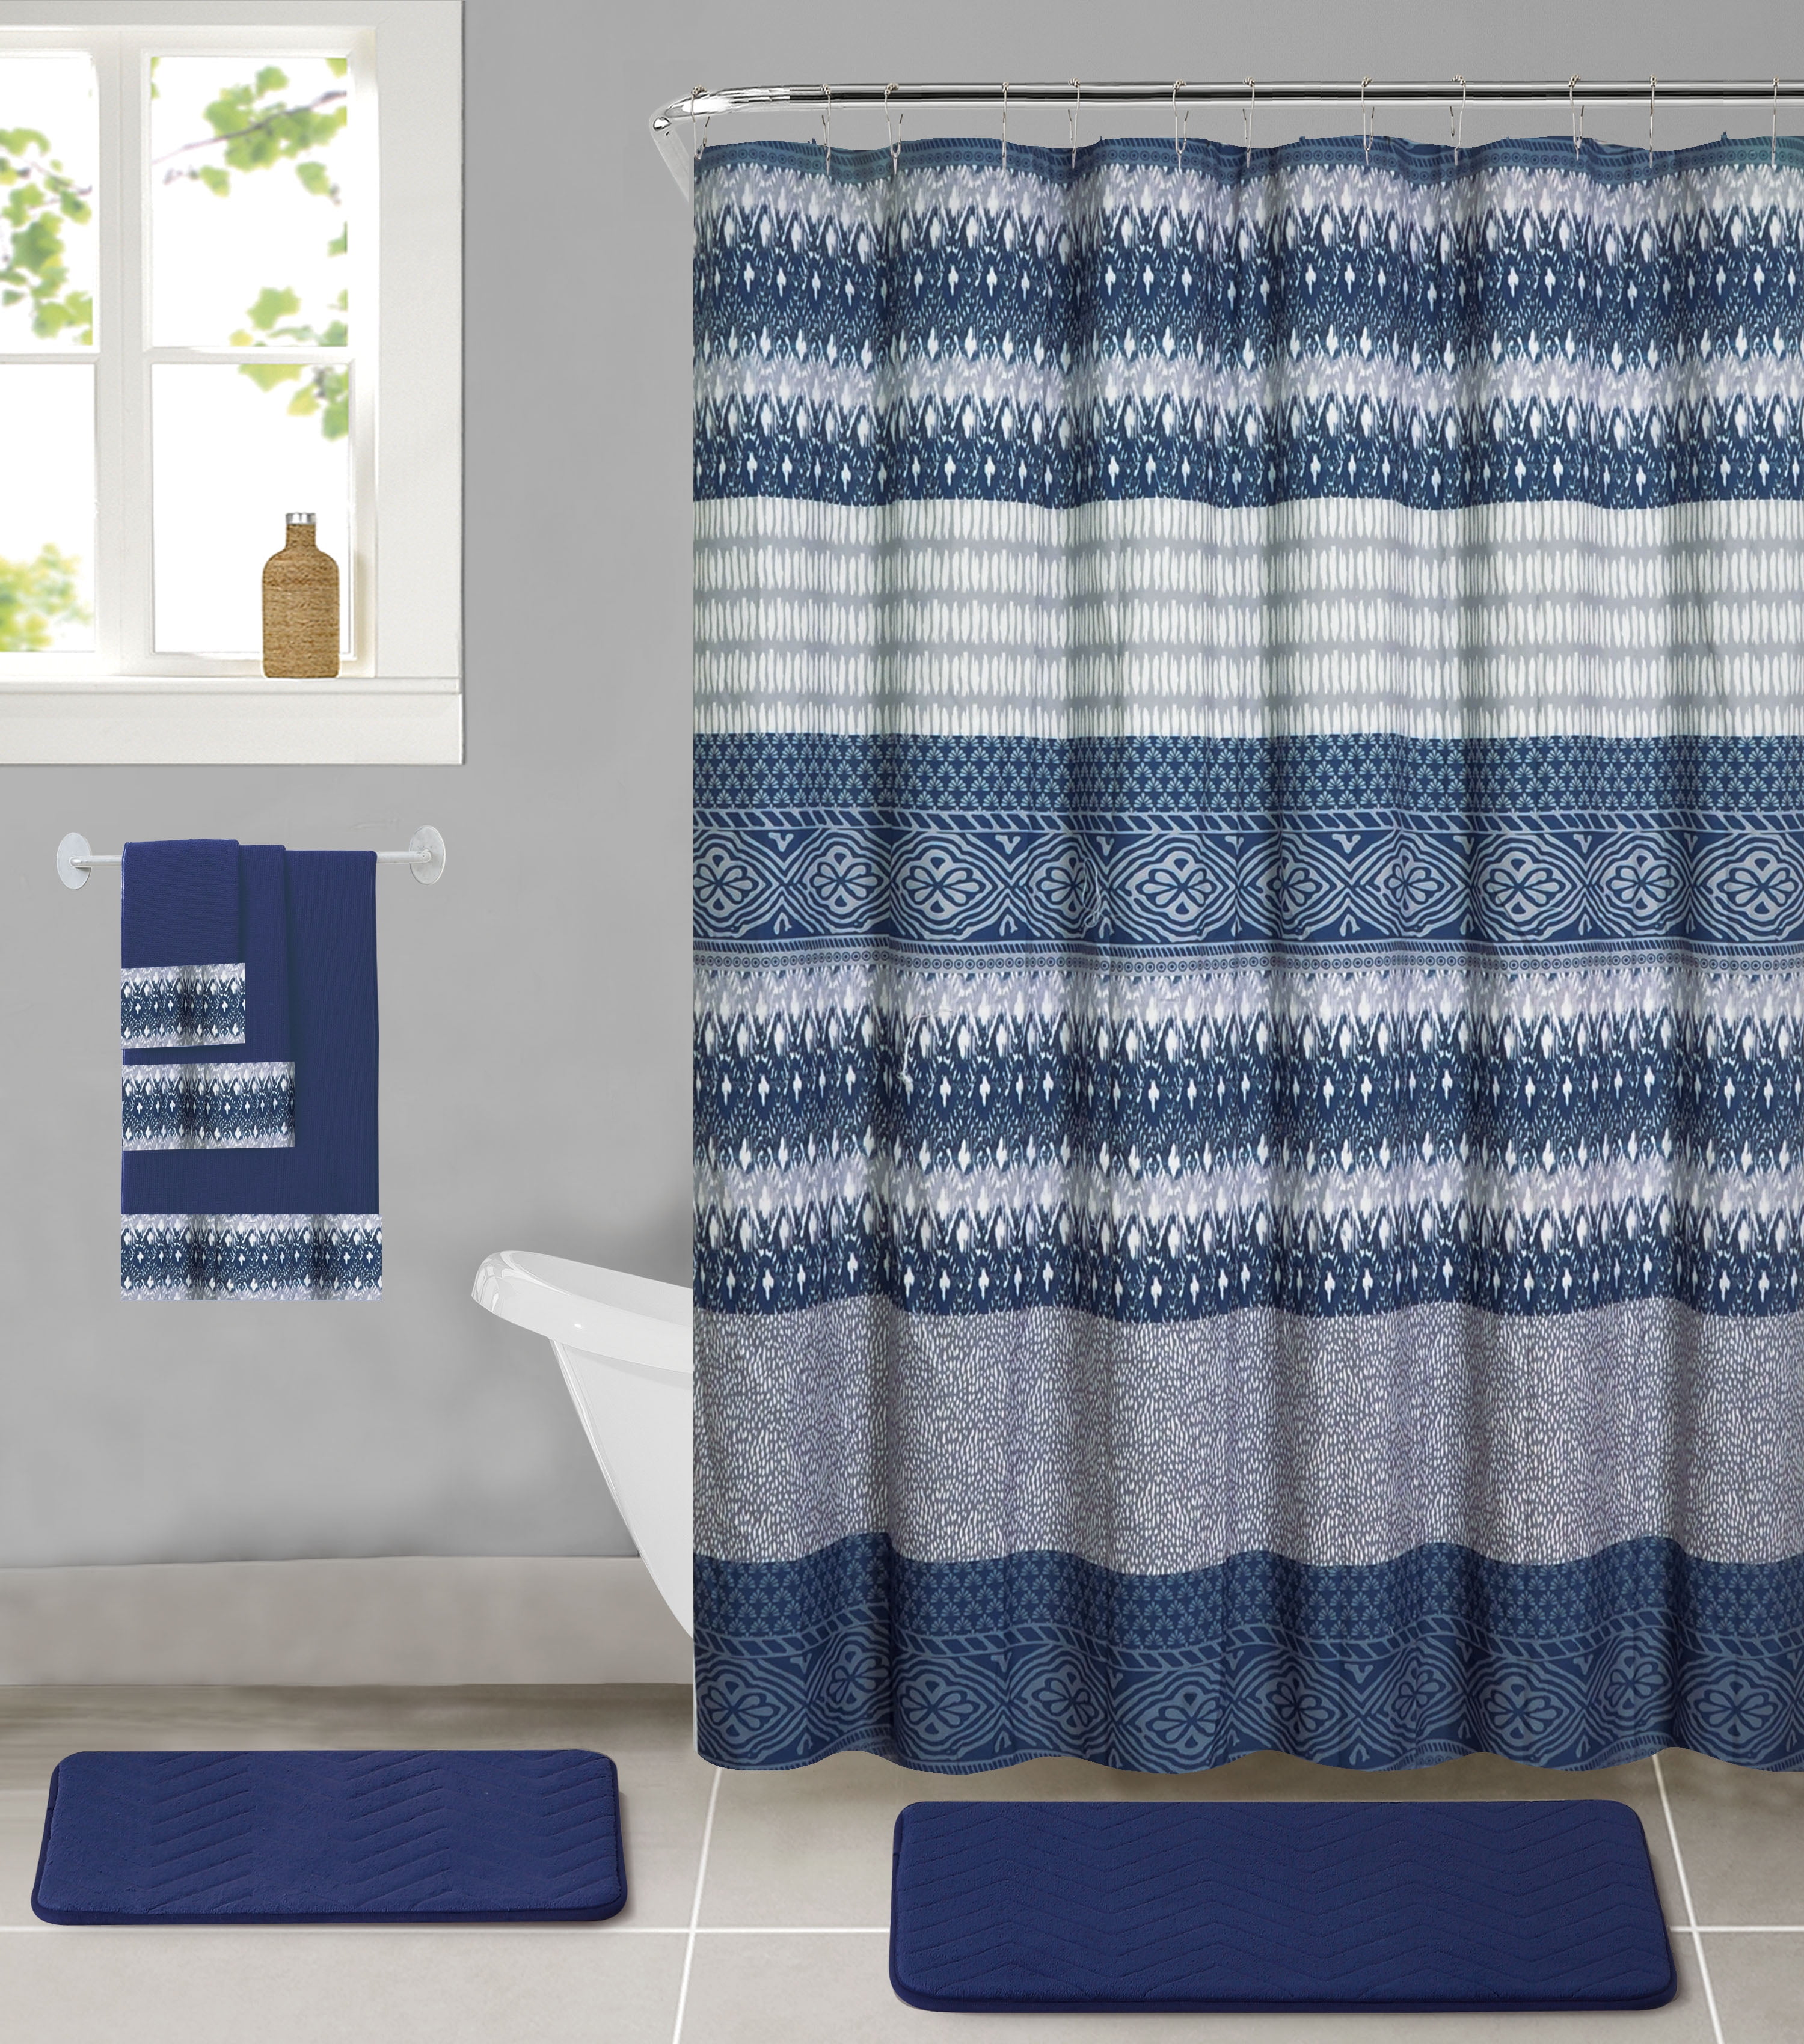 Details about   US Colorful Life Tree Shower Curtain Anti-Slip Bath Mat Pedestal Lid Toilet Rug 